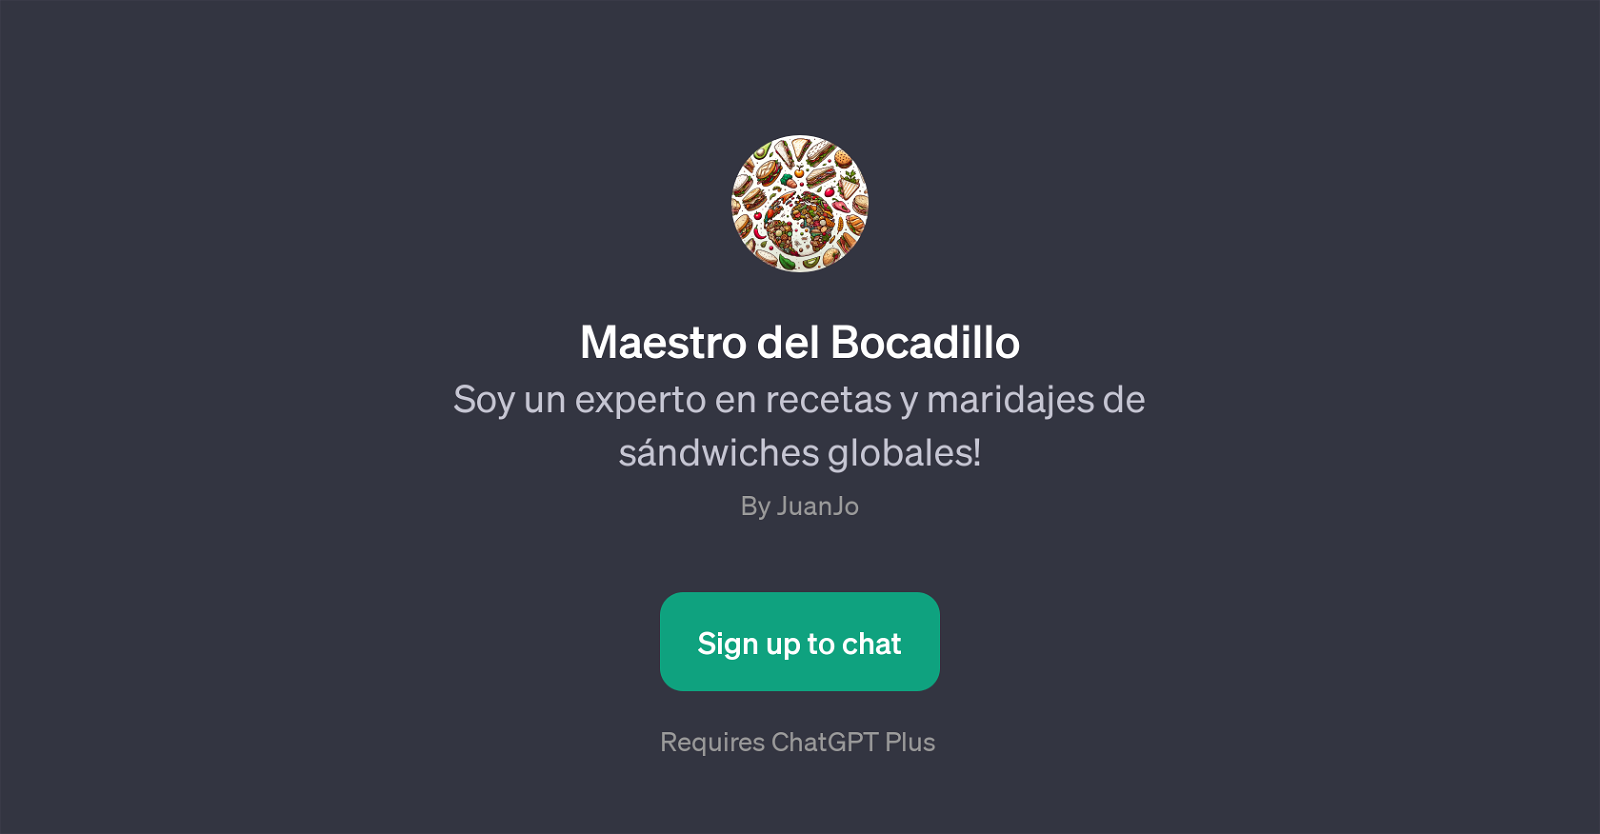 Maestro del Bocadillo website